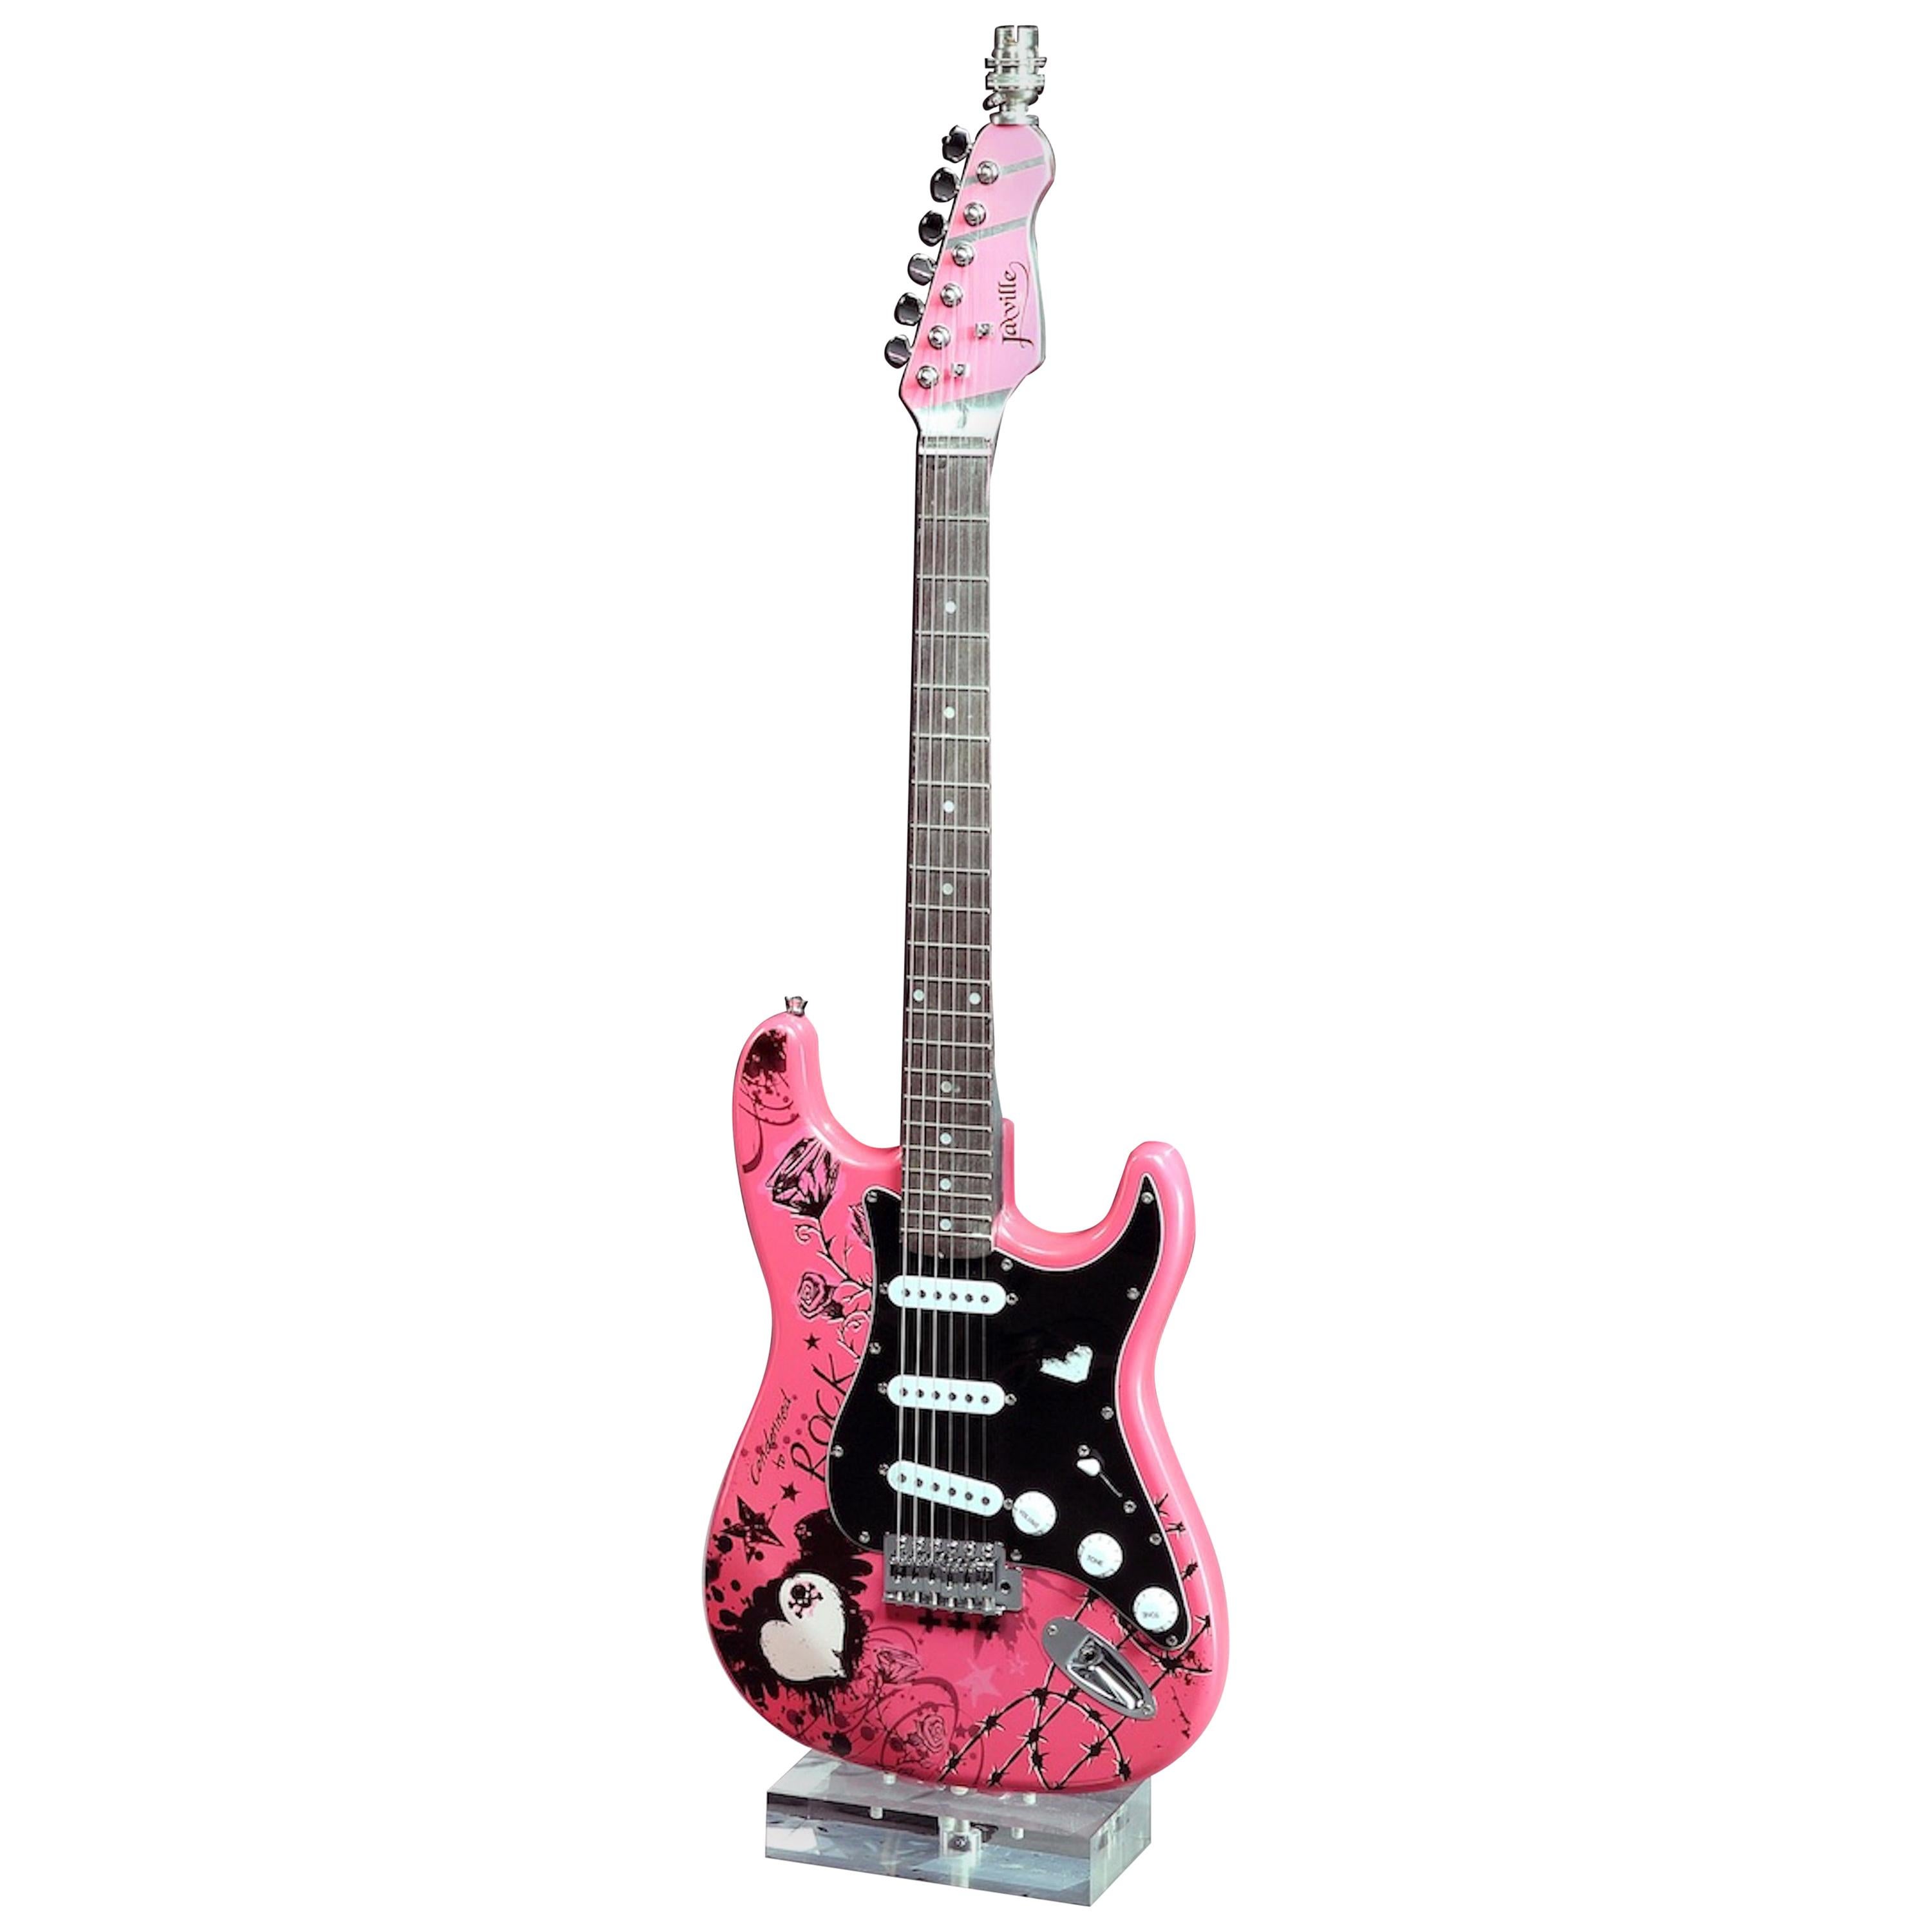 Lampe Guitar Electric Punk Bubble Gum Pink Condemned to Rock & Roll Chrome Maple en vente